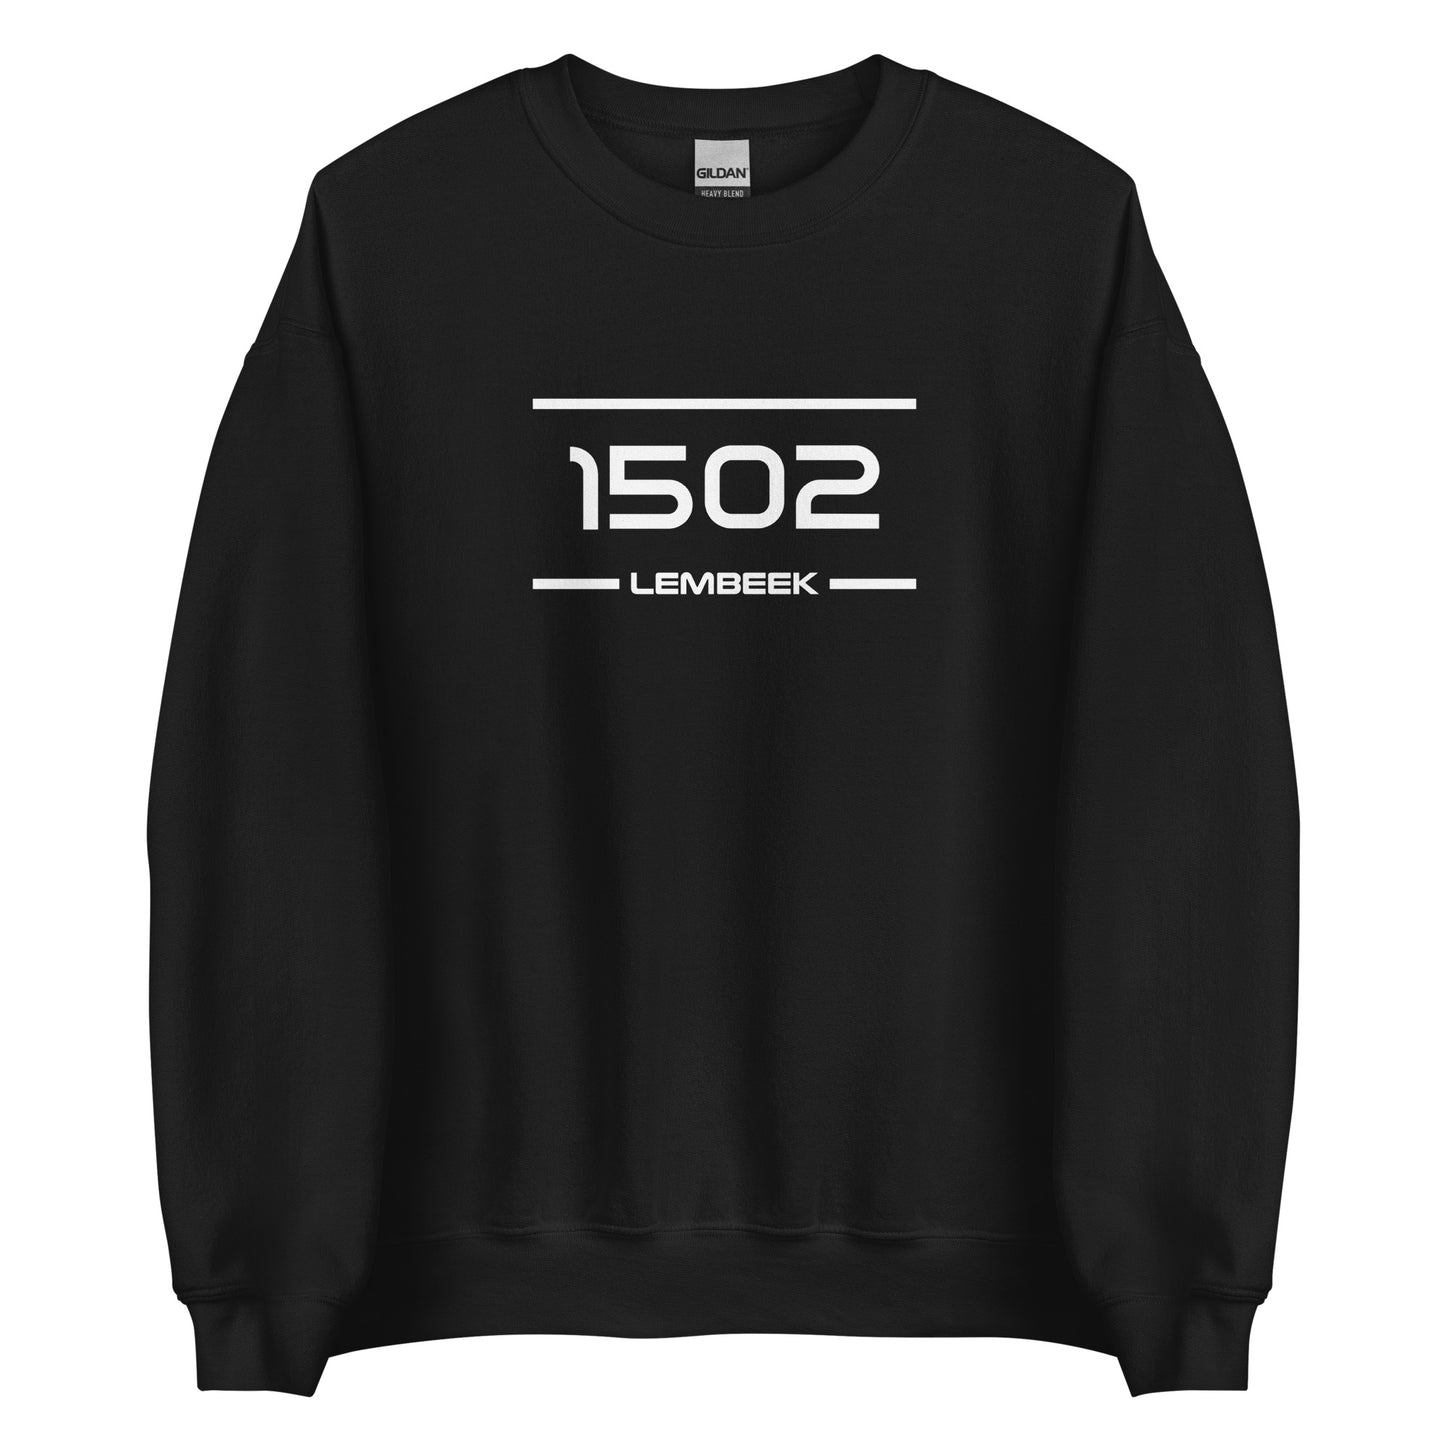 Sweater - 1502 - Lembeek (M/V)